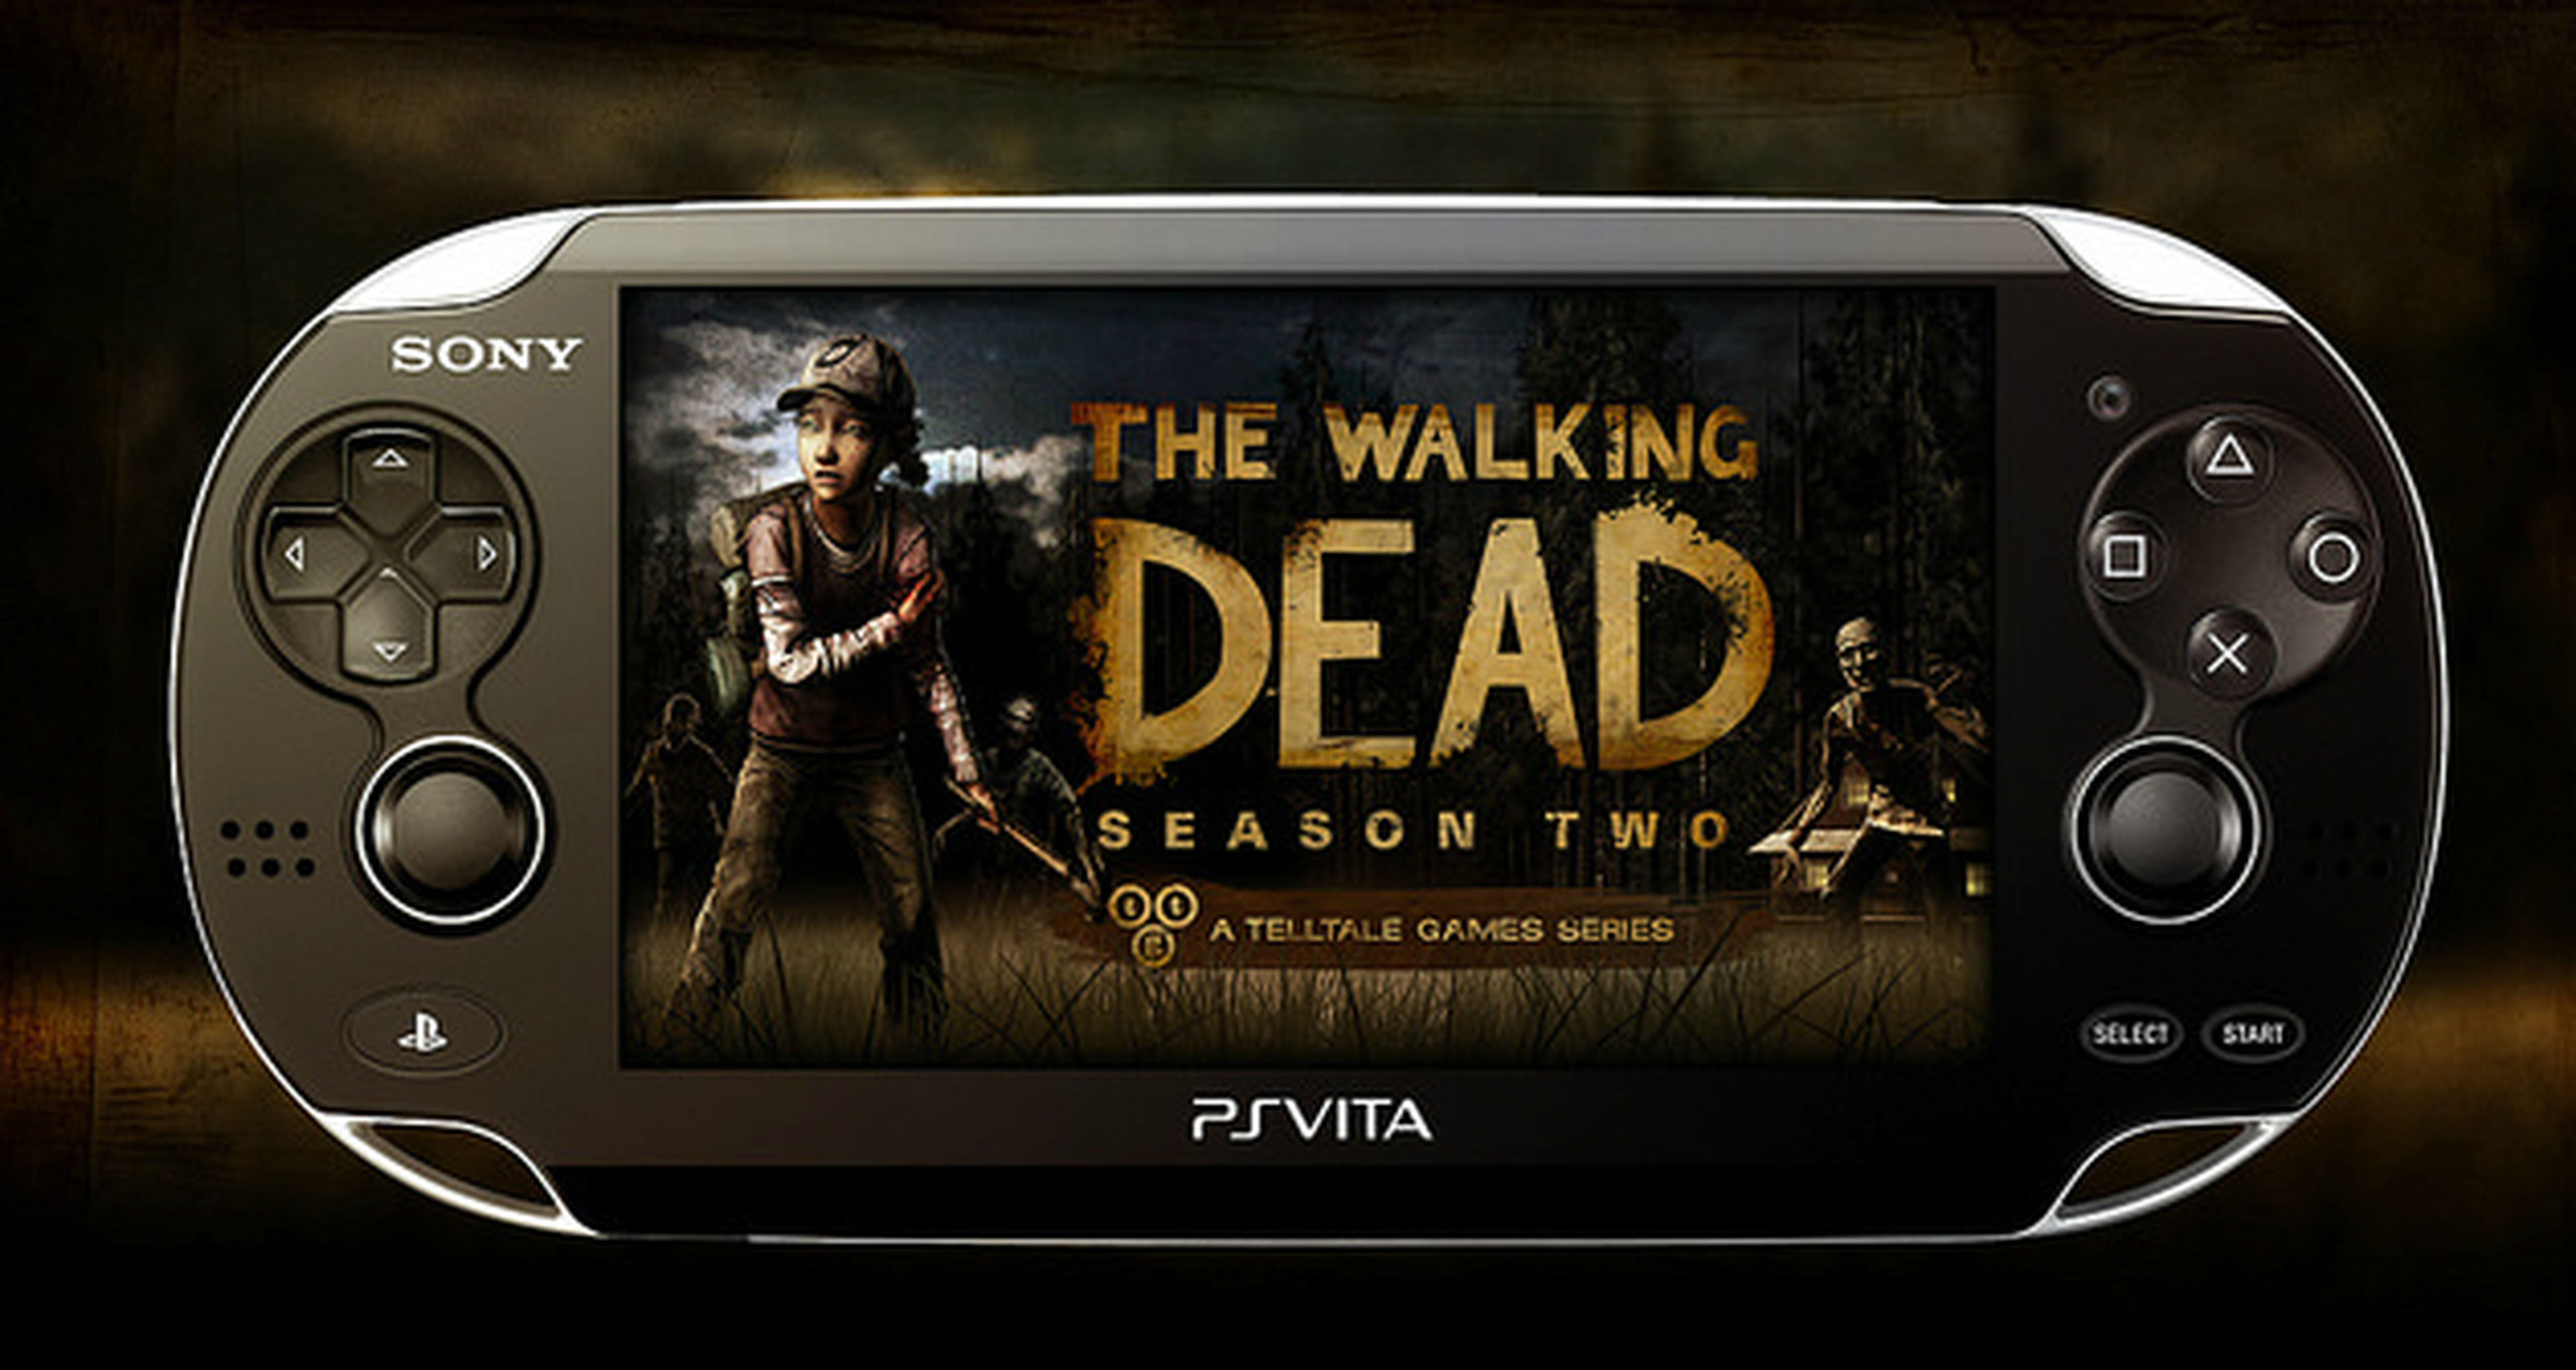 The Walking Dead season 2 llegará a PS Vita la próxima semana